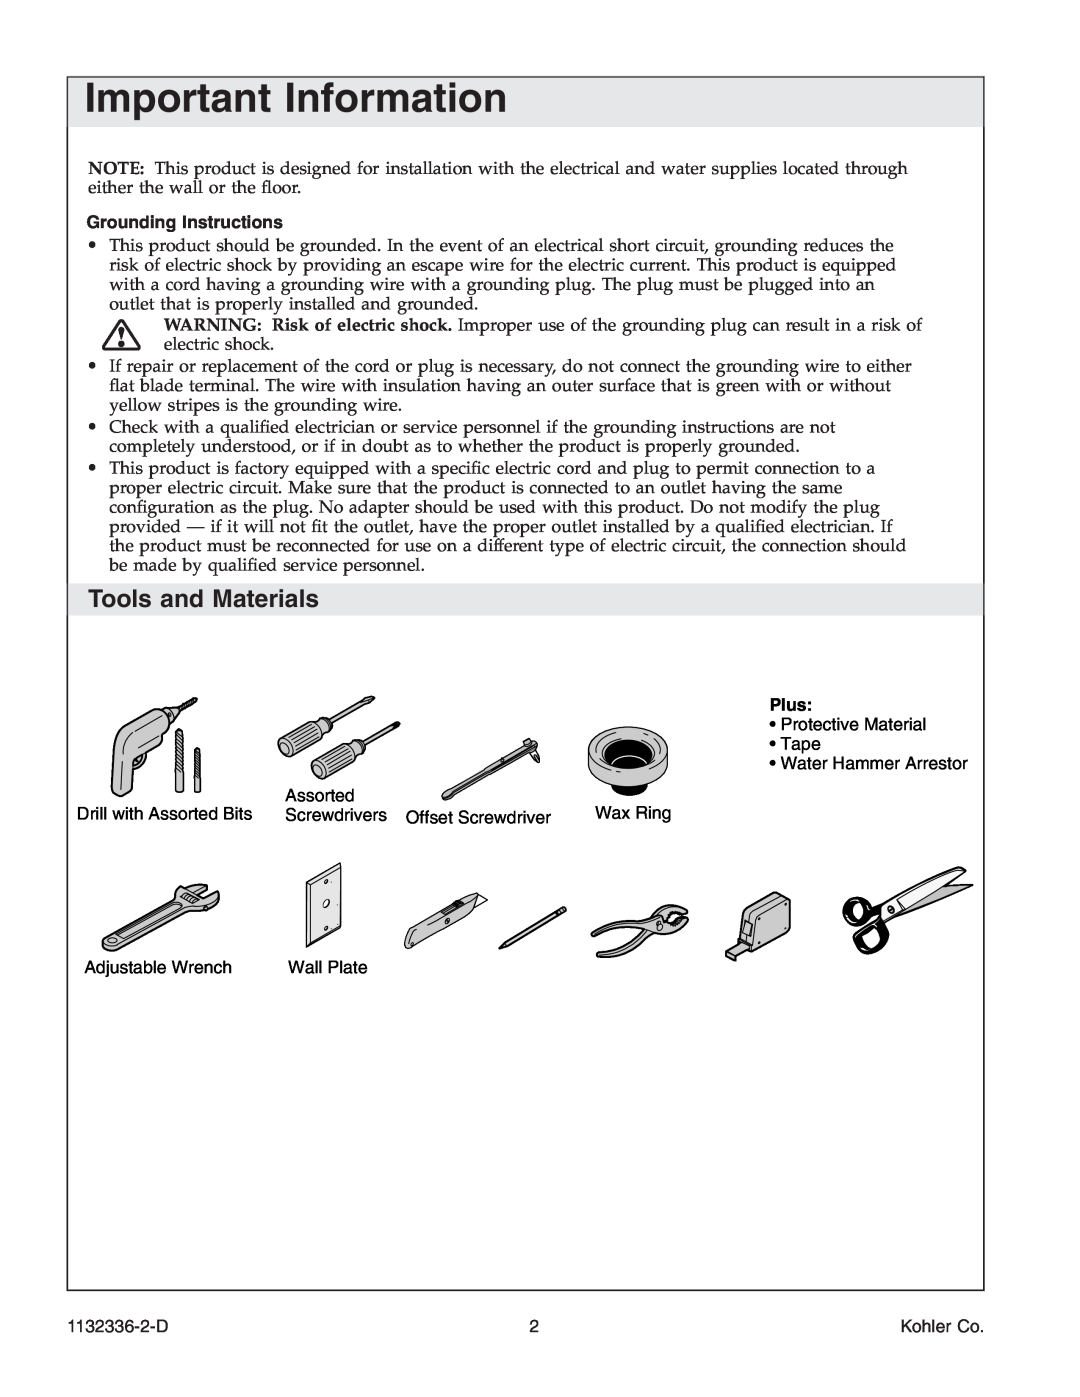 Kohler K-3900 manual Important Information, Tools and Materials, Grounding Instructions, Plus, 1132336-2-D, Kohler Co 